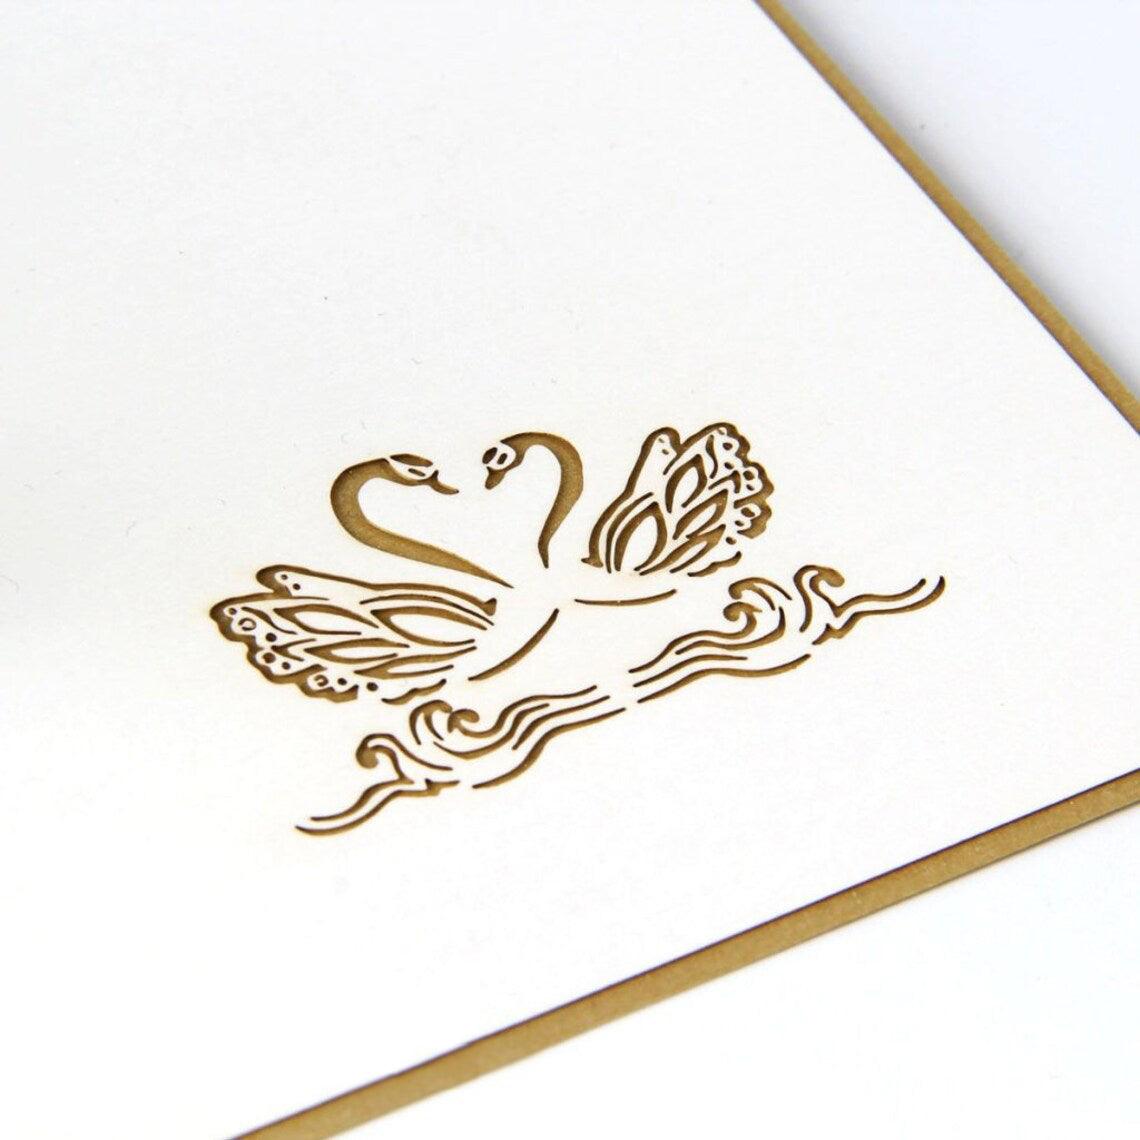 Handmade 3D Pop-Up Card with White Swan Design - Lasercutwraps Shop